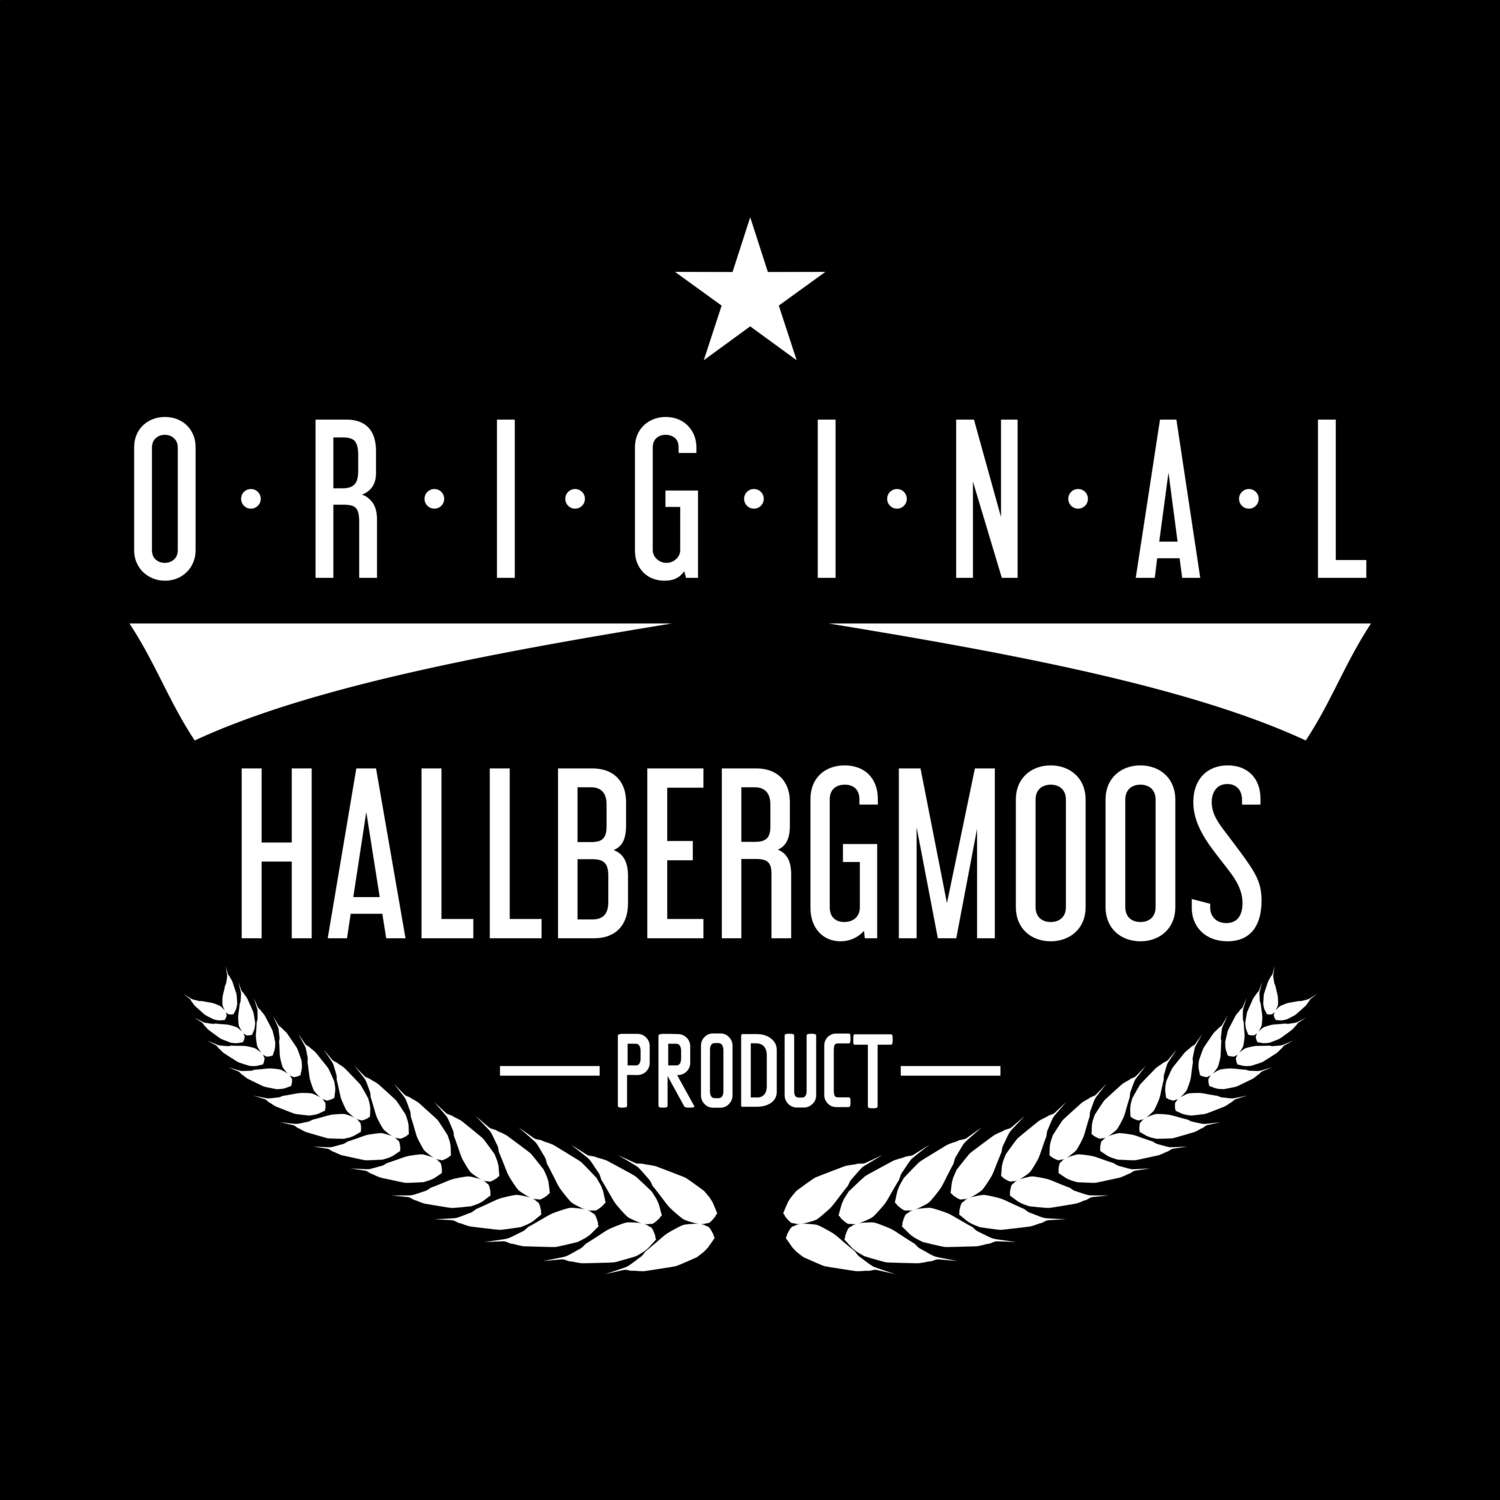 Hallbergmoos T-Shirt »Original Product«